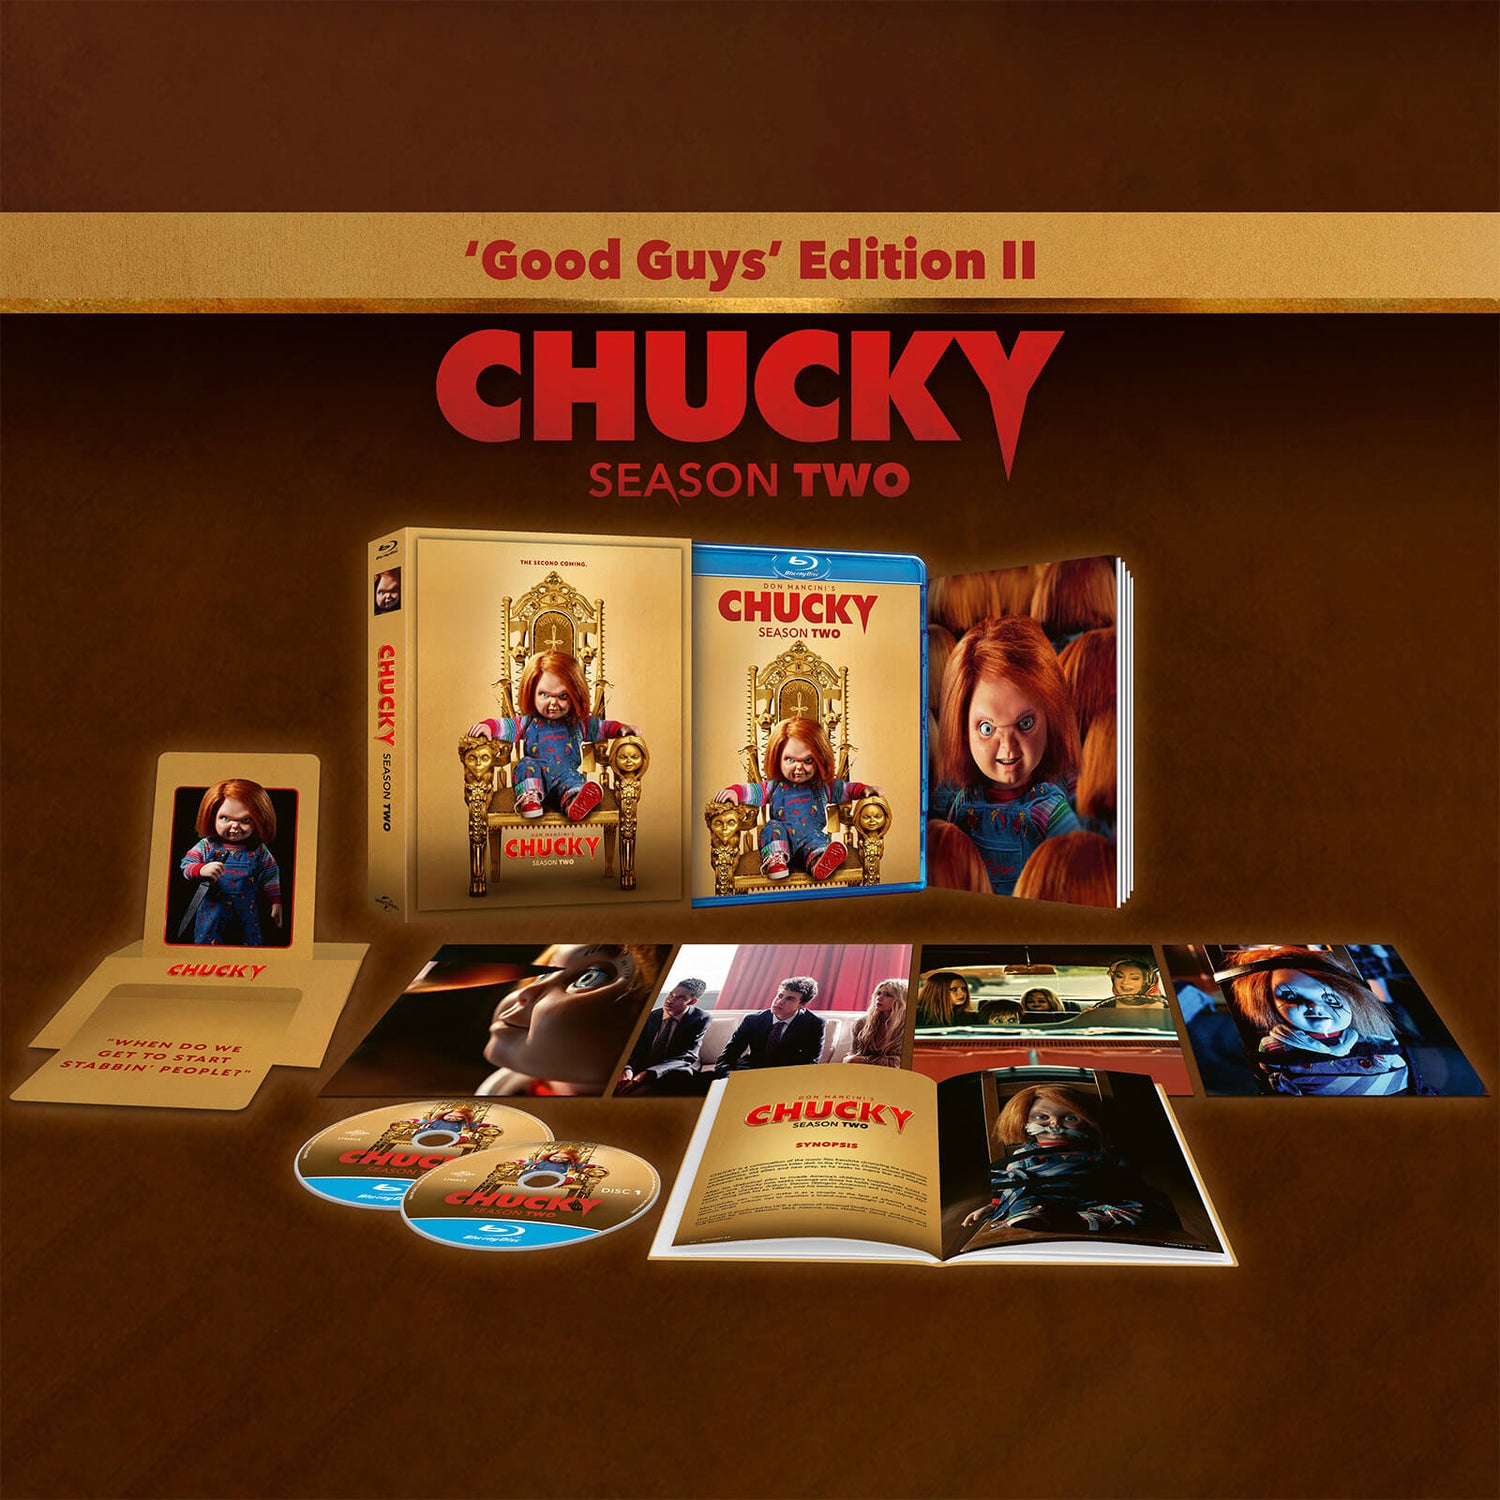 Chucky Season Two Good Guys II Blu-ray Edition